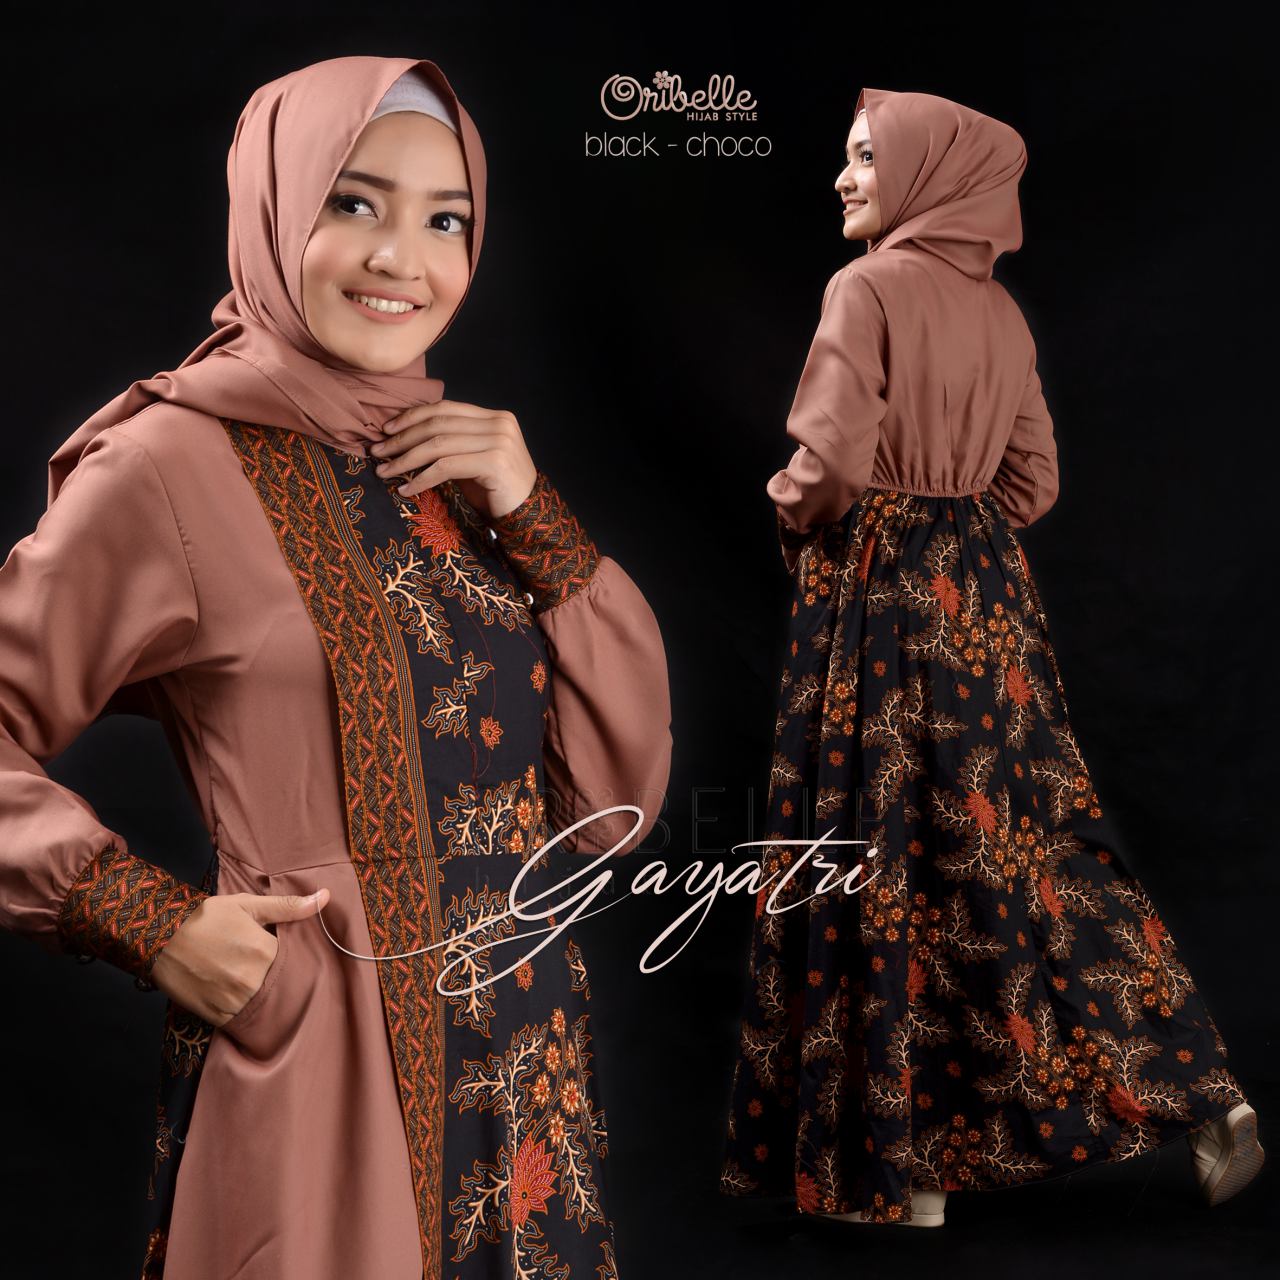 Gayatri Dress By Oribelle Jual Busana Muslimah Batik Modern Love Hijab Indo 085230801919 28629jpg